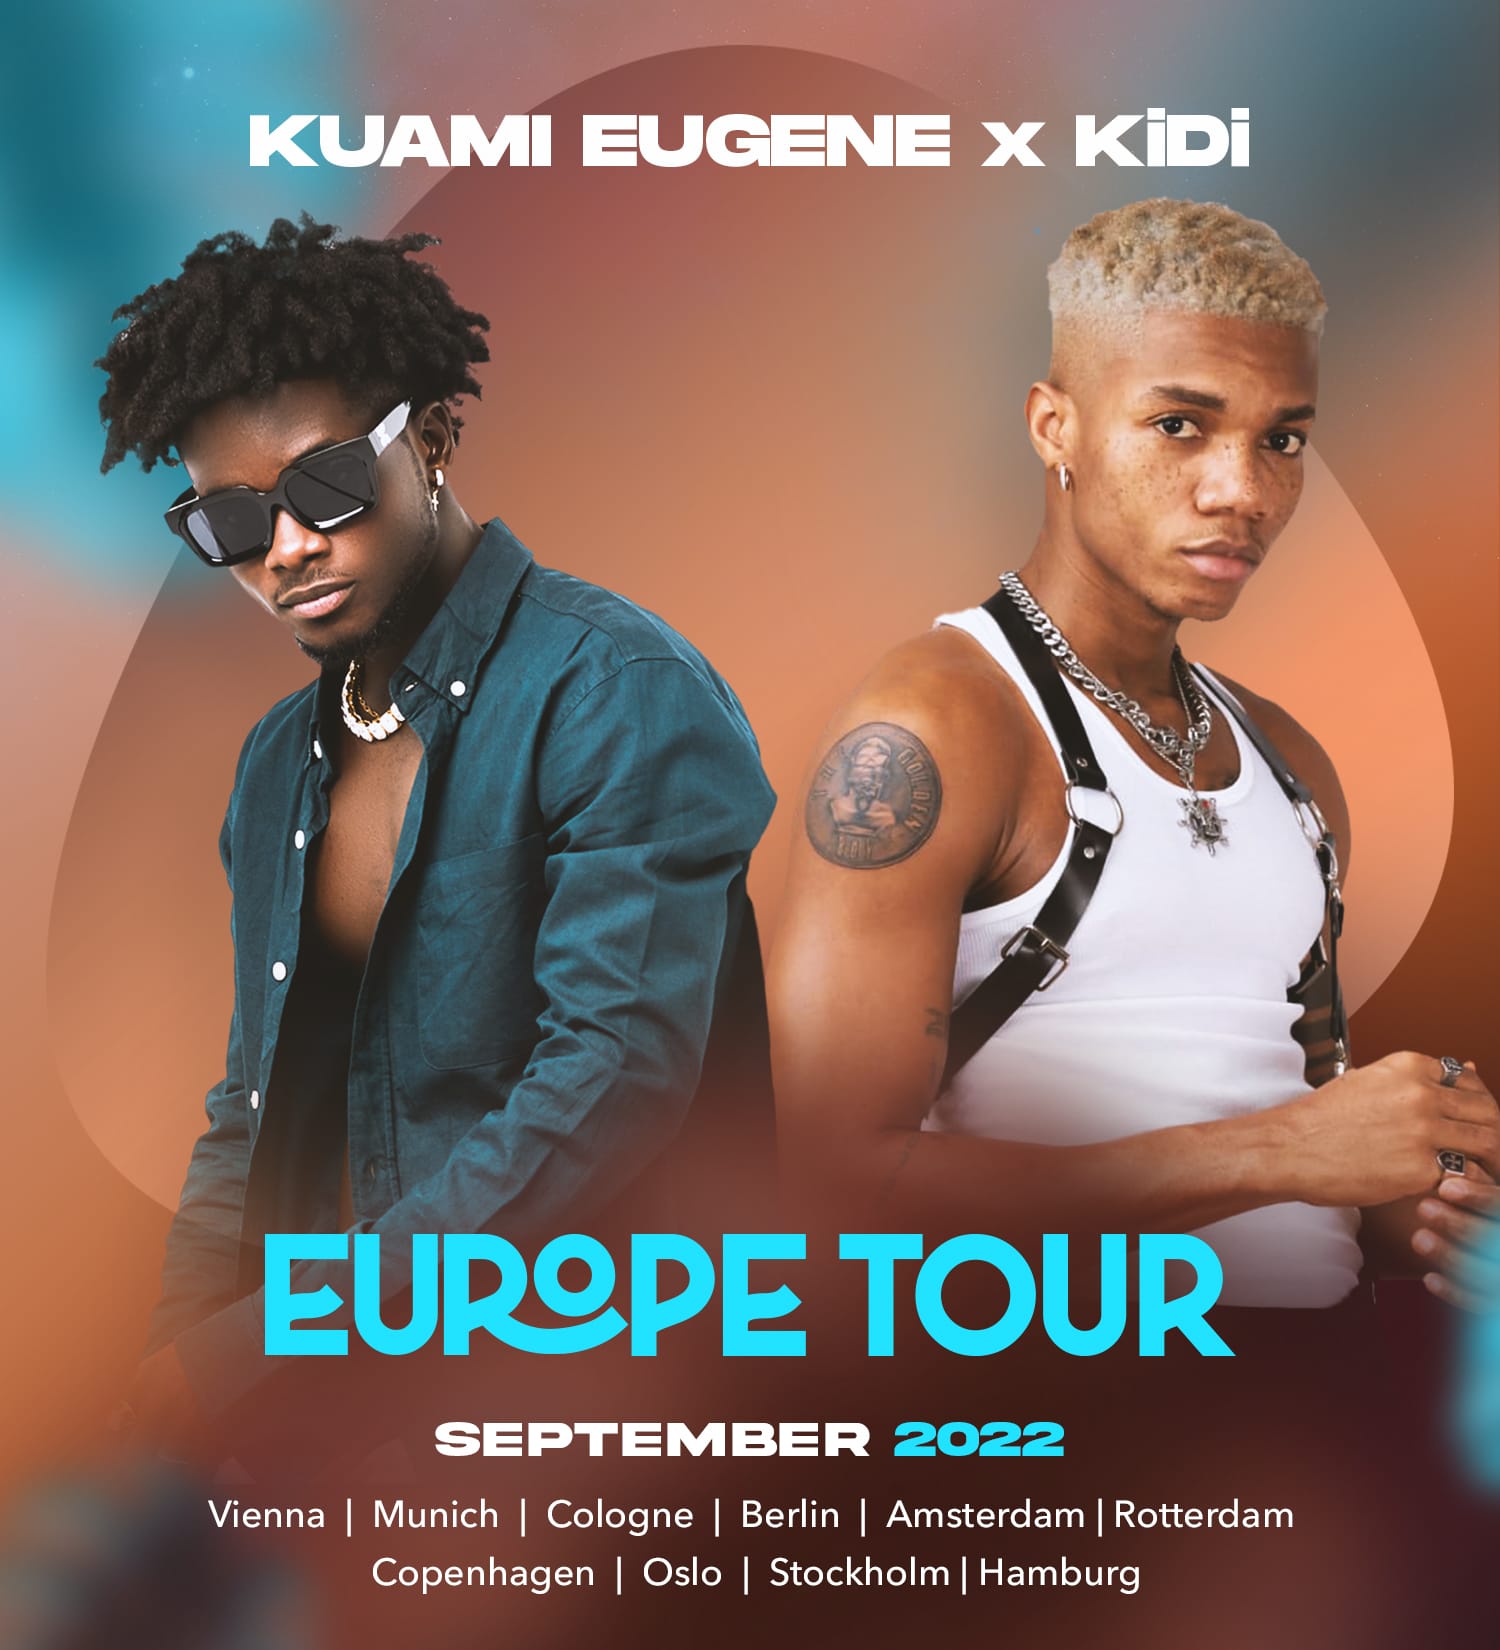 Kuami Eugene and KiDi to tour 10 cities in Europe